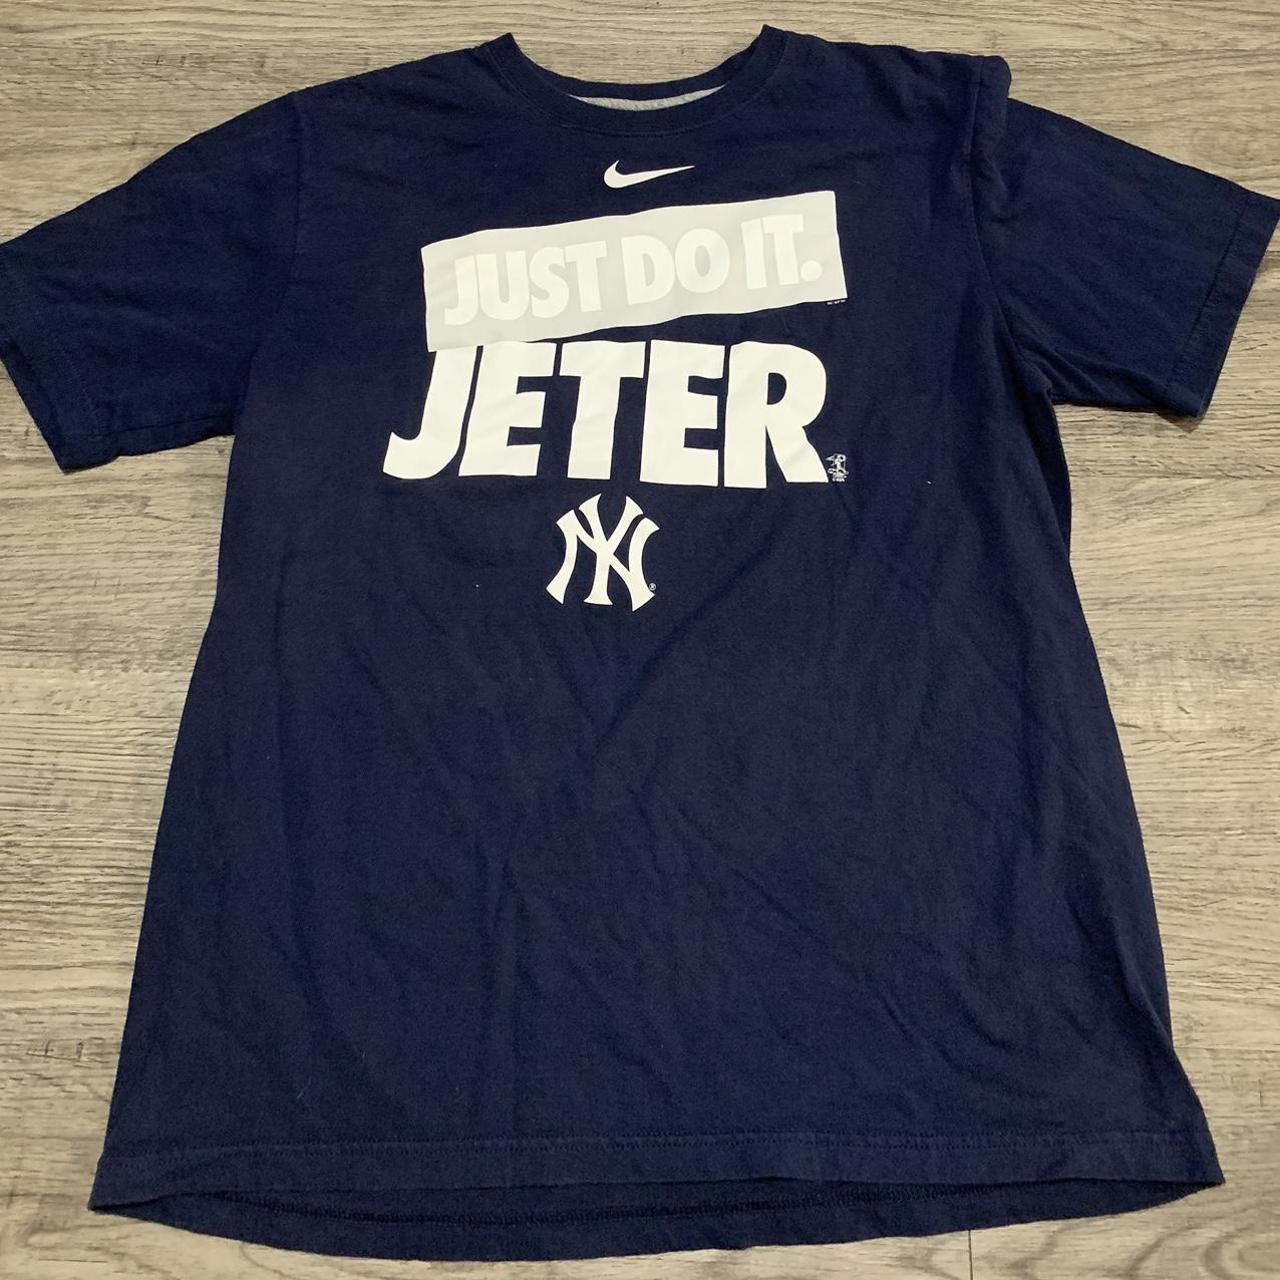 New York Yankees Derek Jeter Gray T-Shirt by Nike